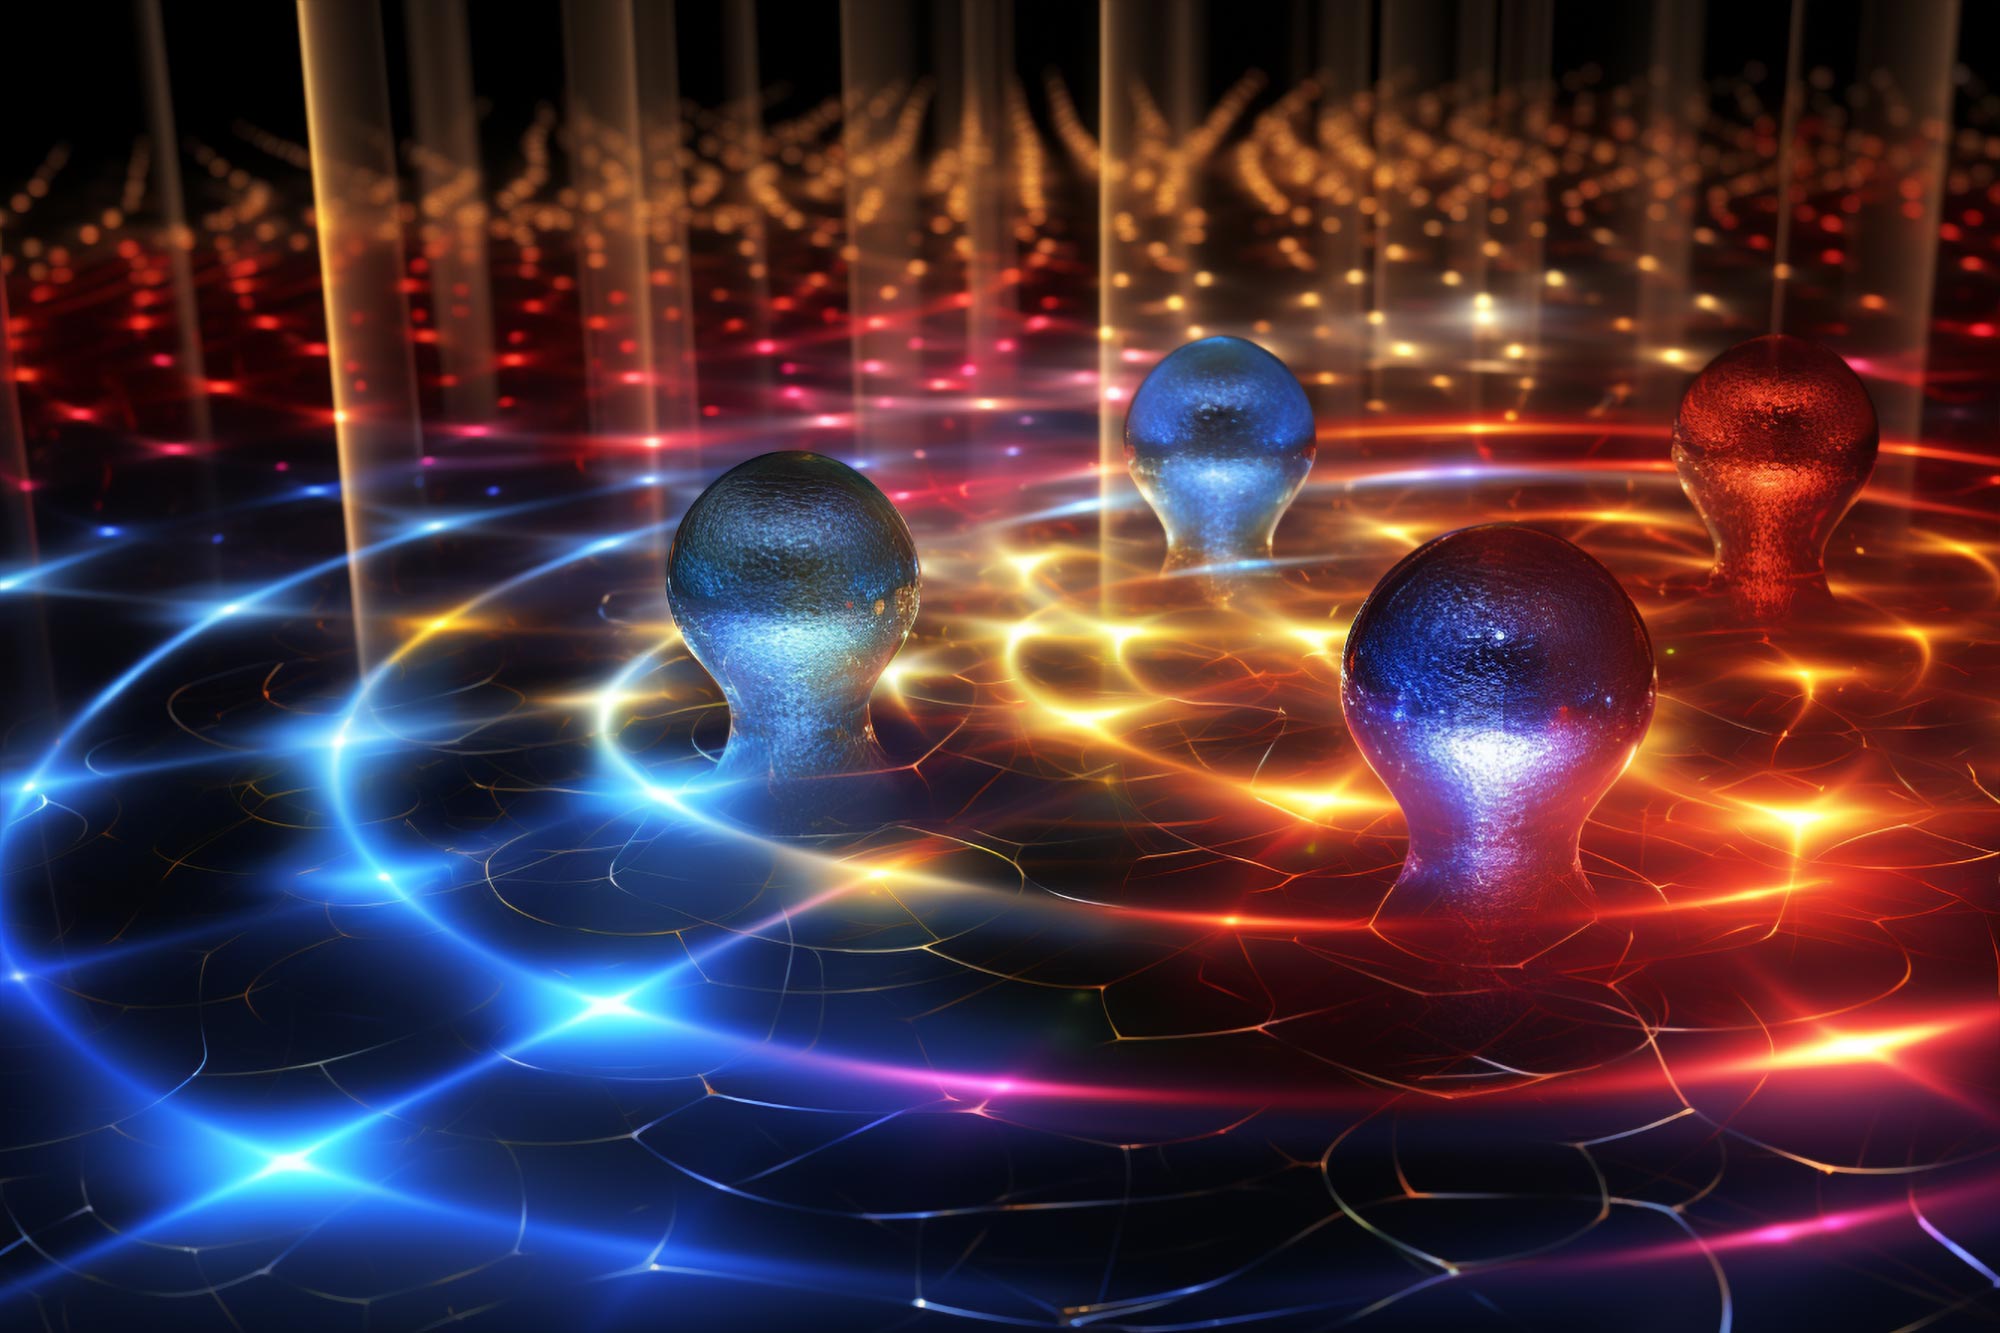 Exploring Quantum Gravity - Fascinating Posts from November 2015